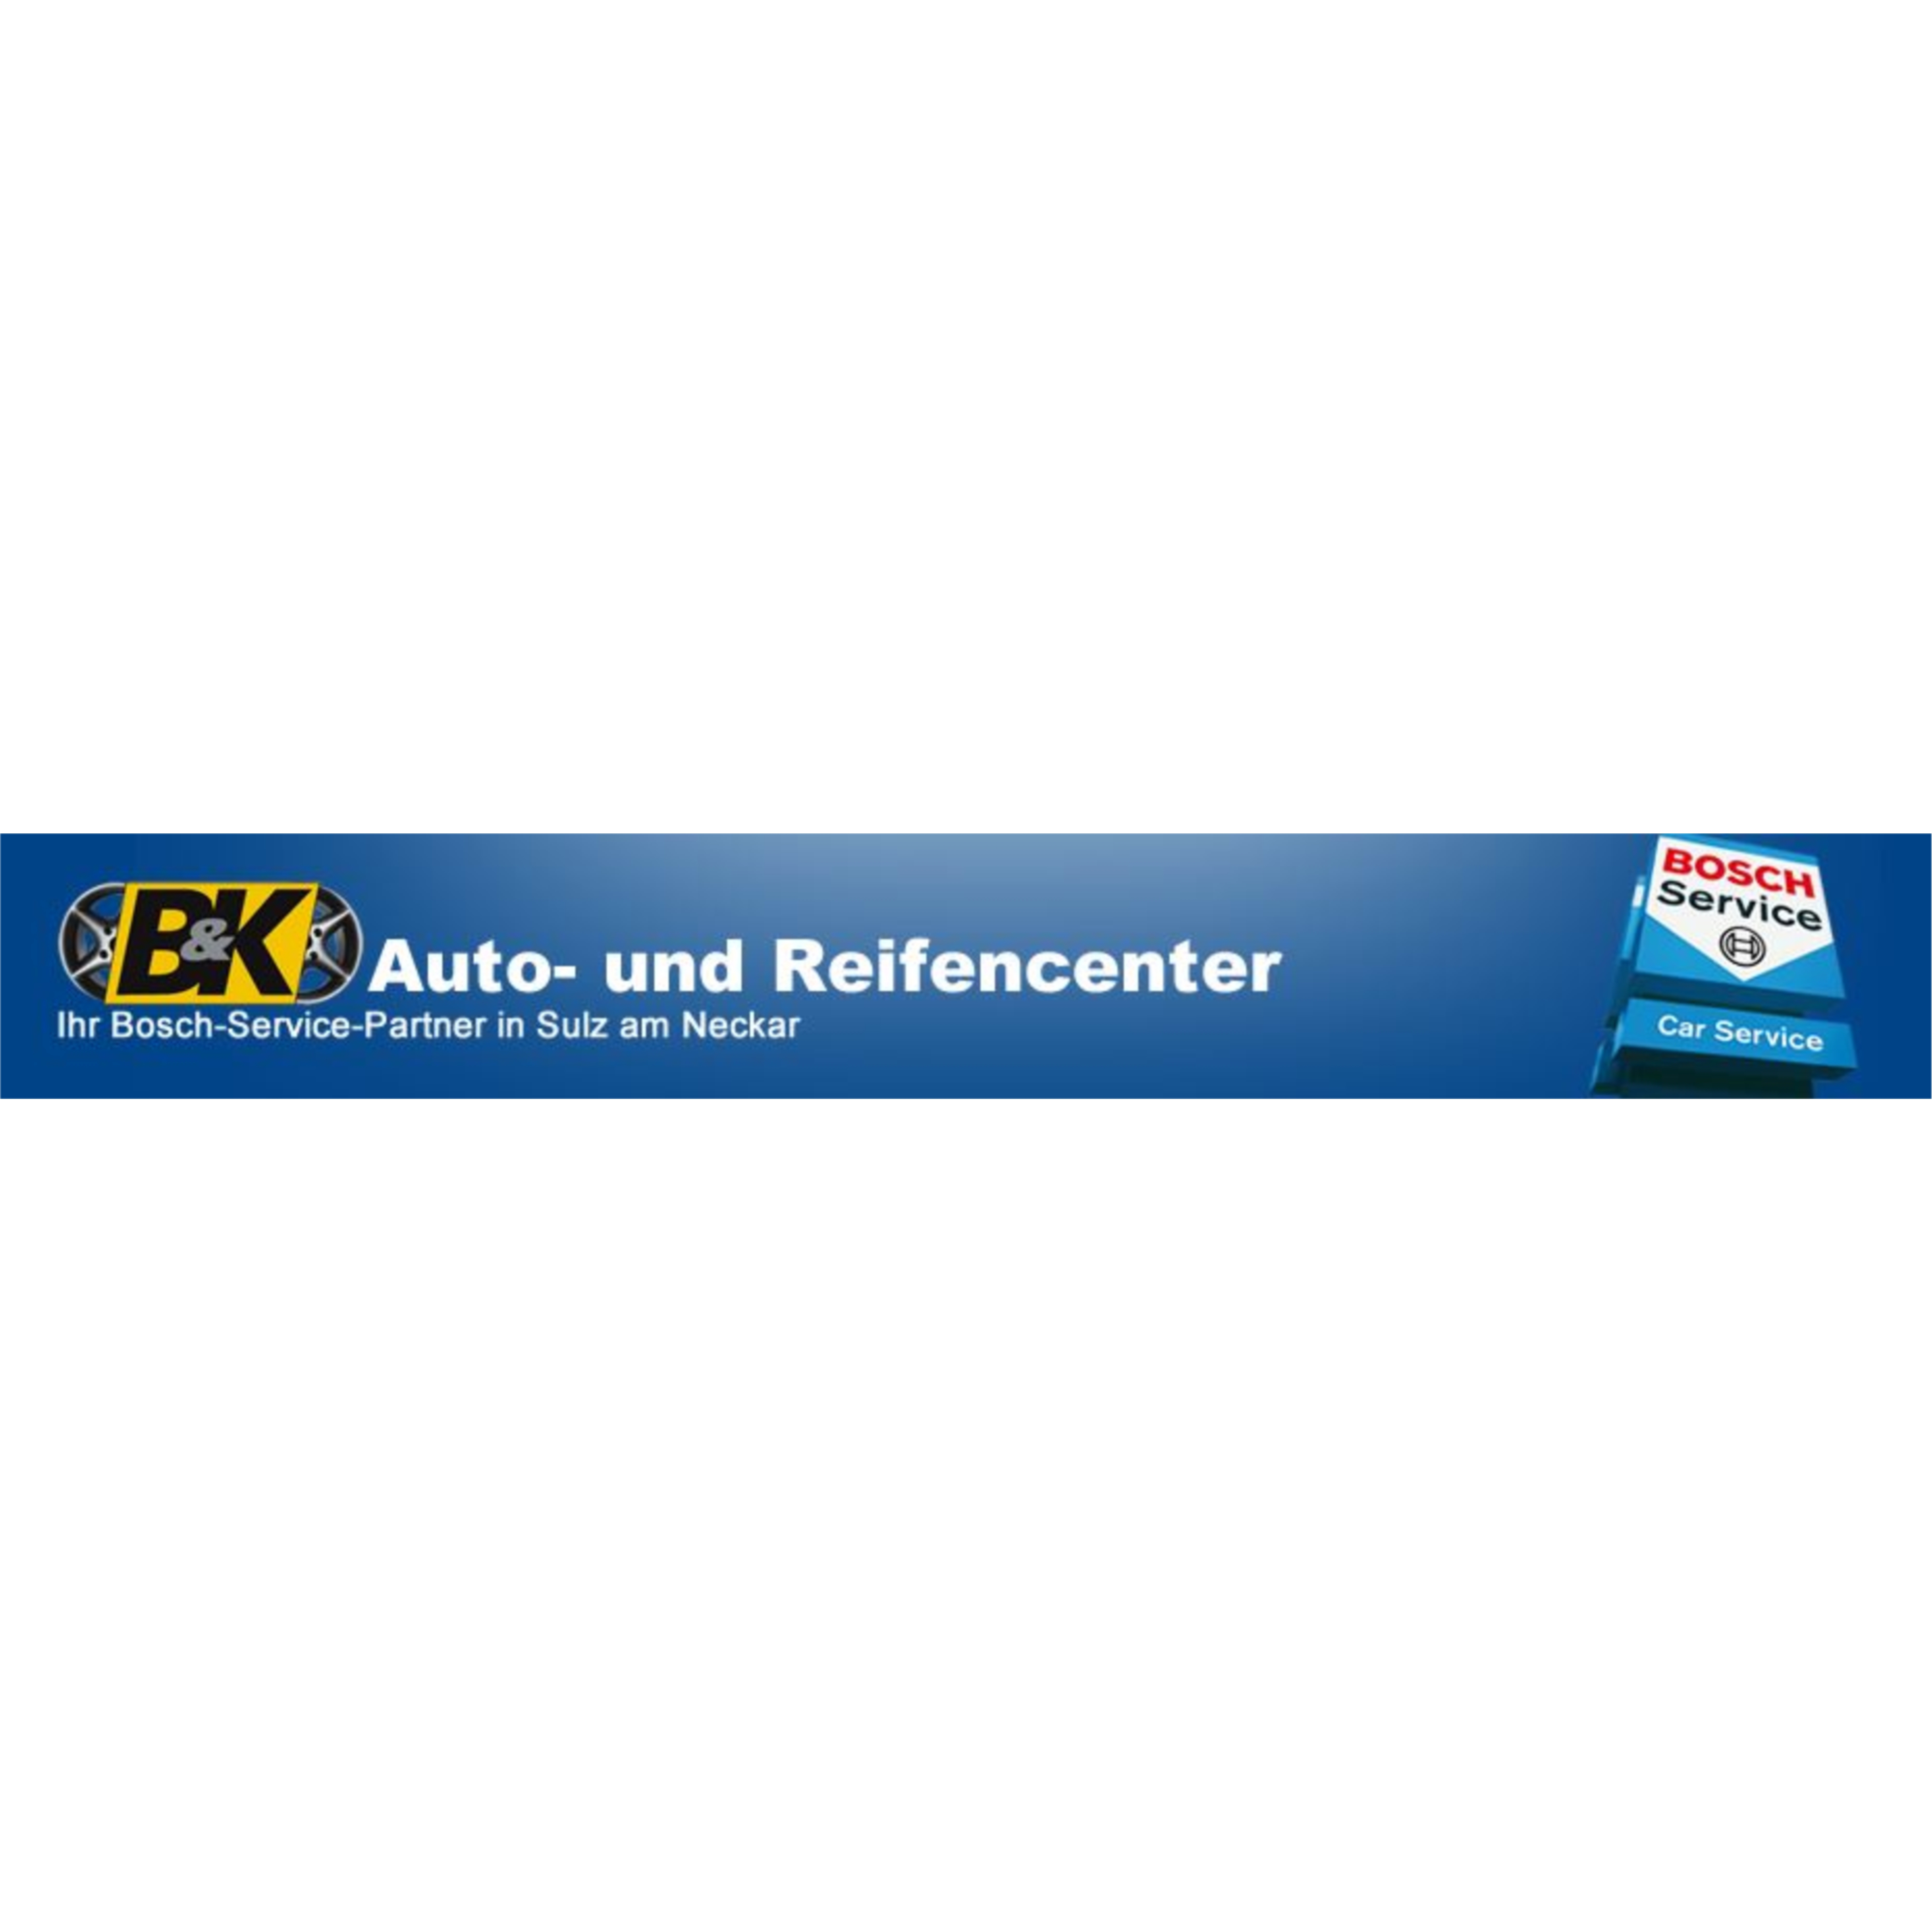 B & K Auto- und Reifencenter e. K. - Bosch Car Service Logo